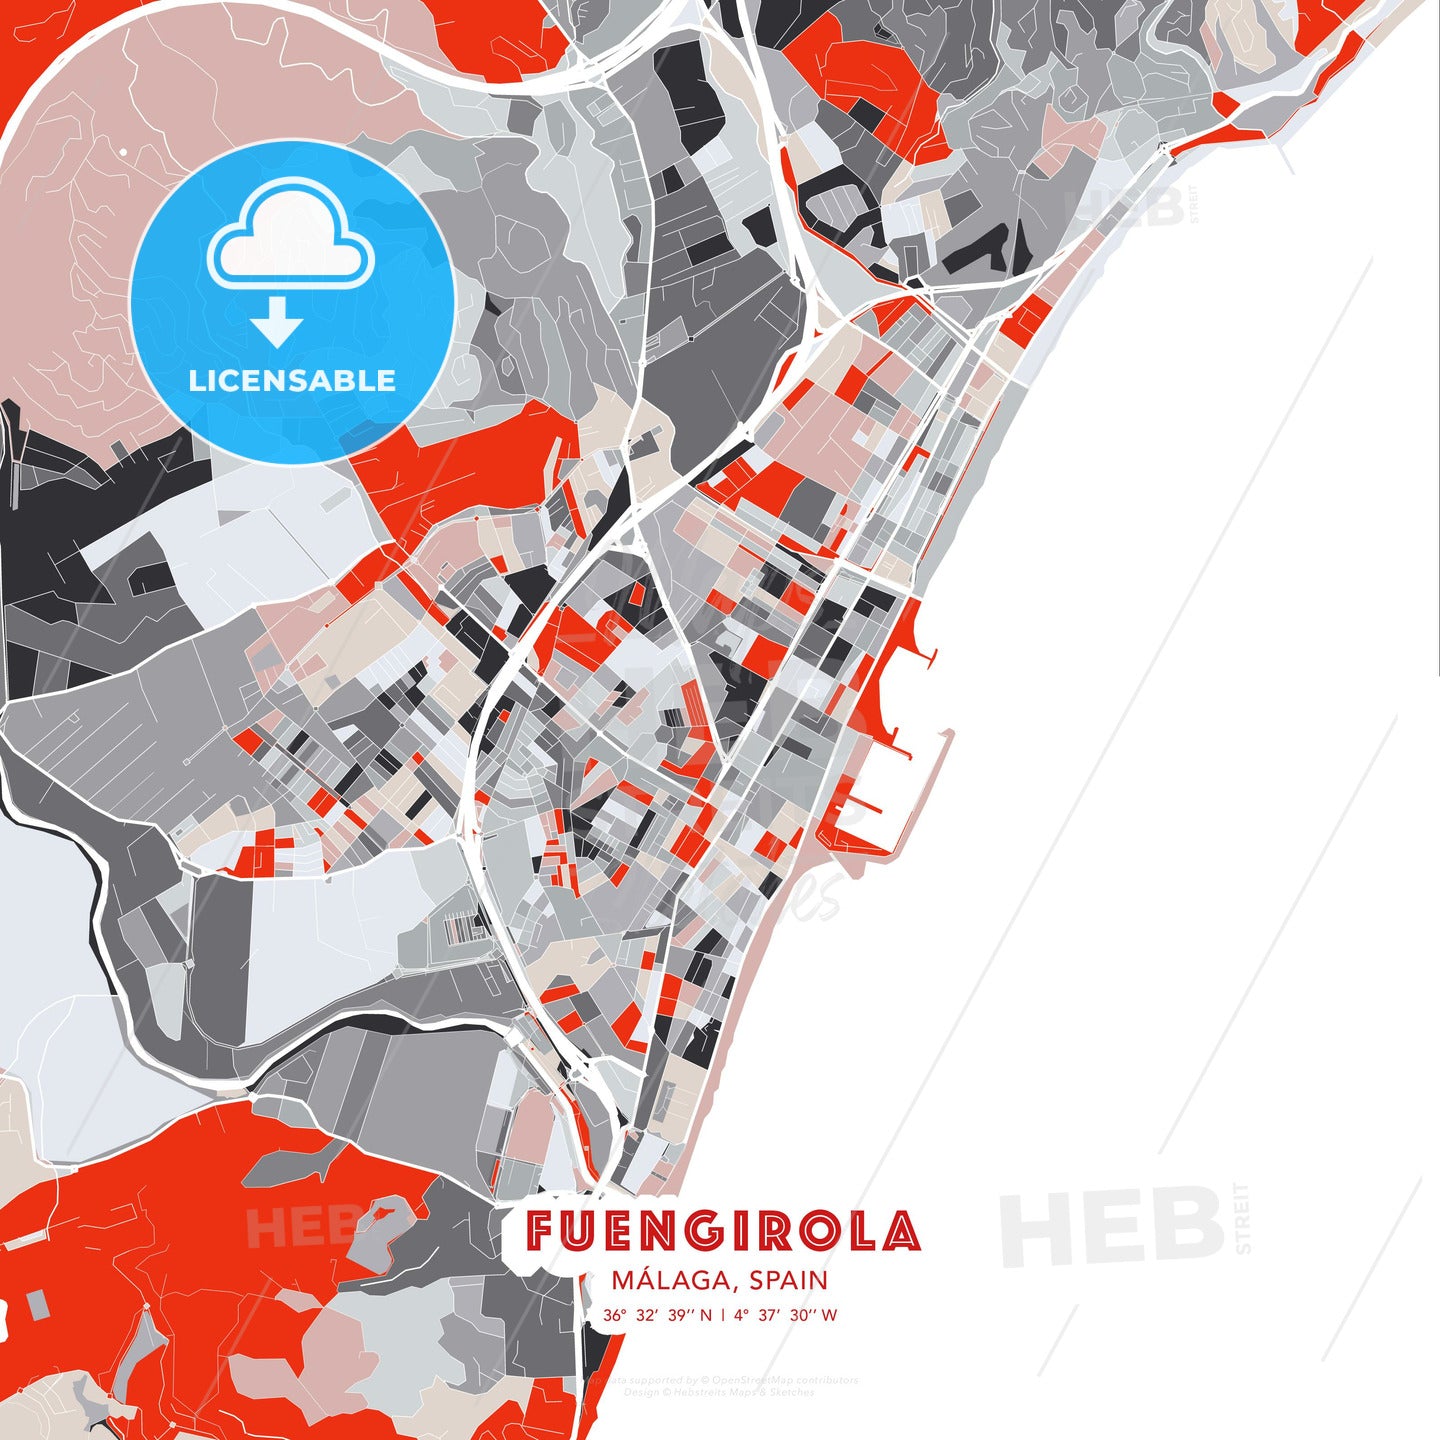 Fuengirola, Málaga, Spain, modern map - HEBSTREITS Sketches